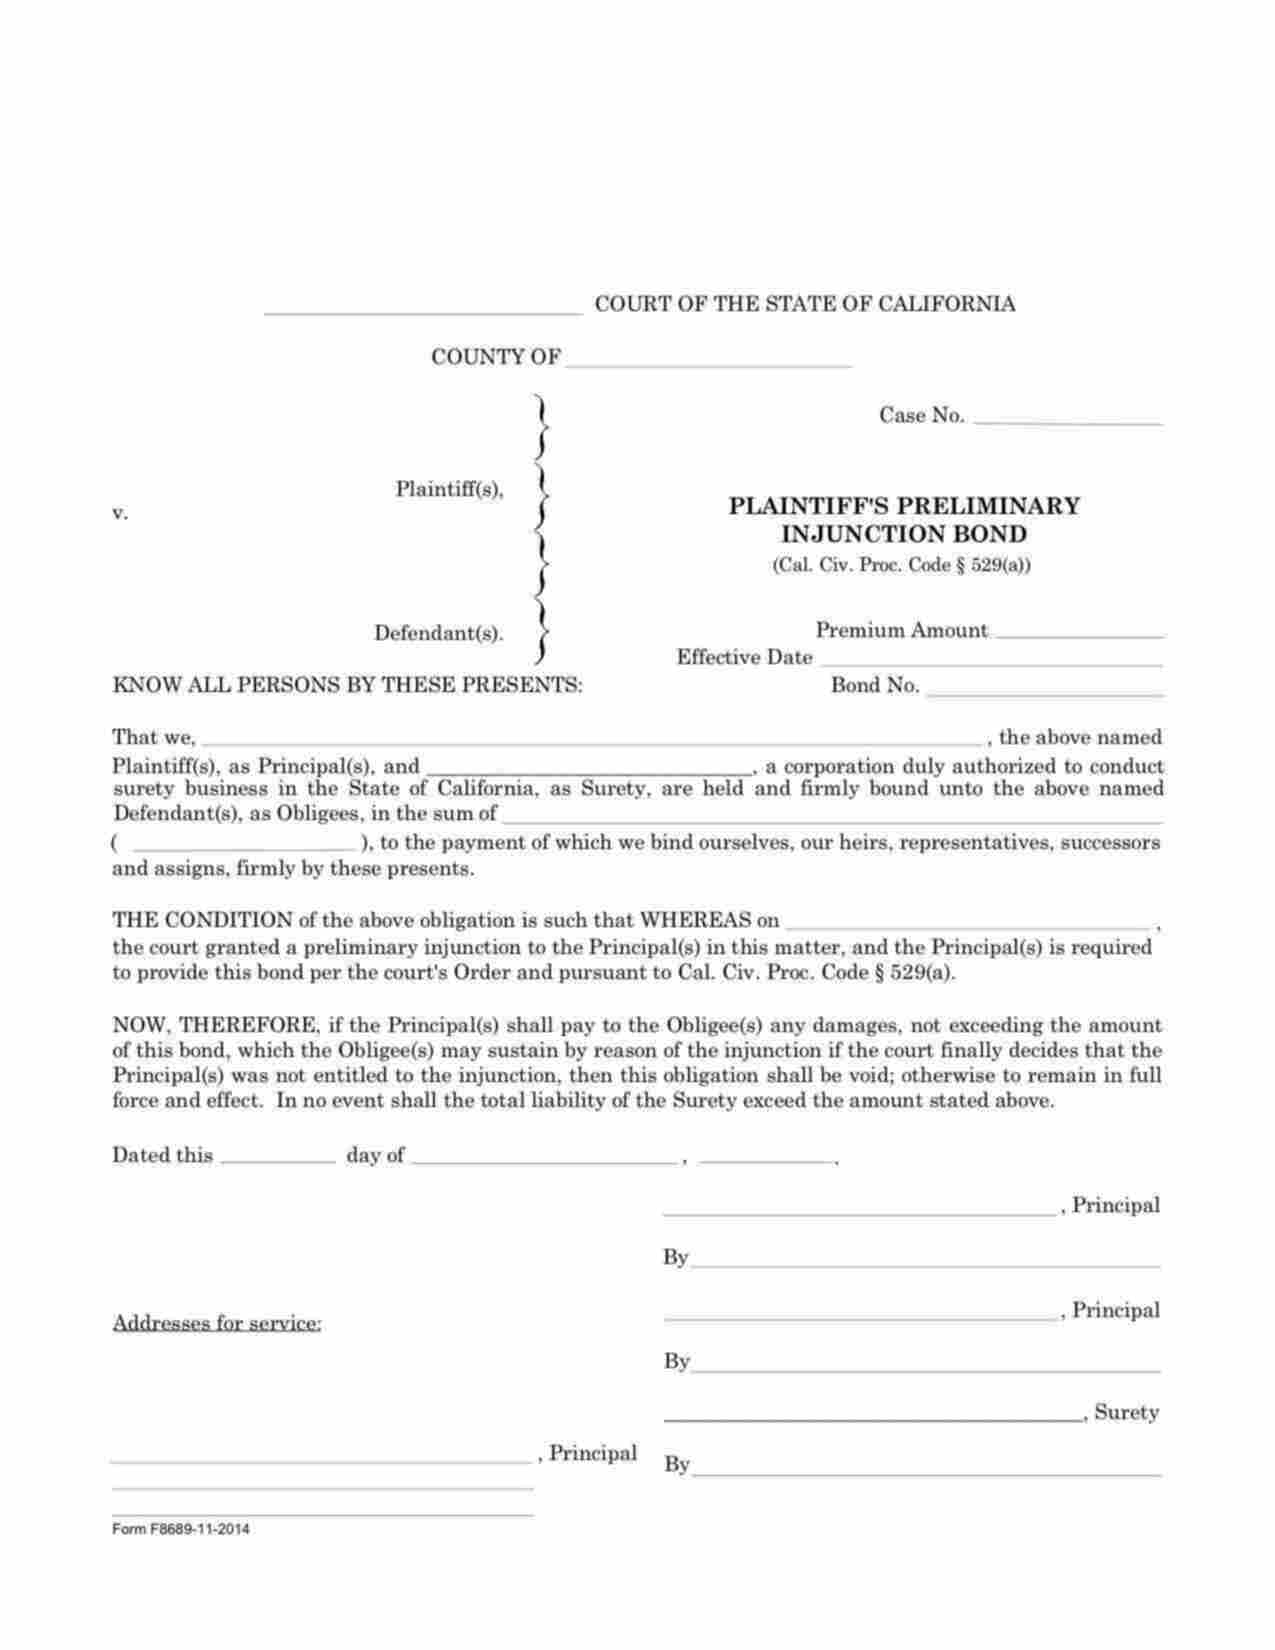 California Plaintiffs Preliminary Injunction Bond Form